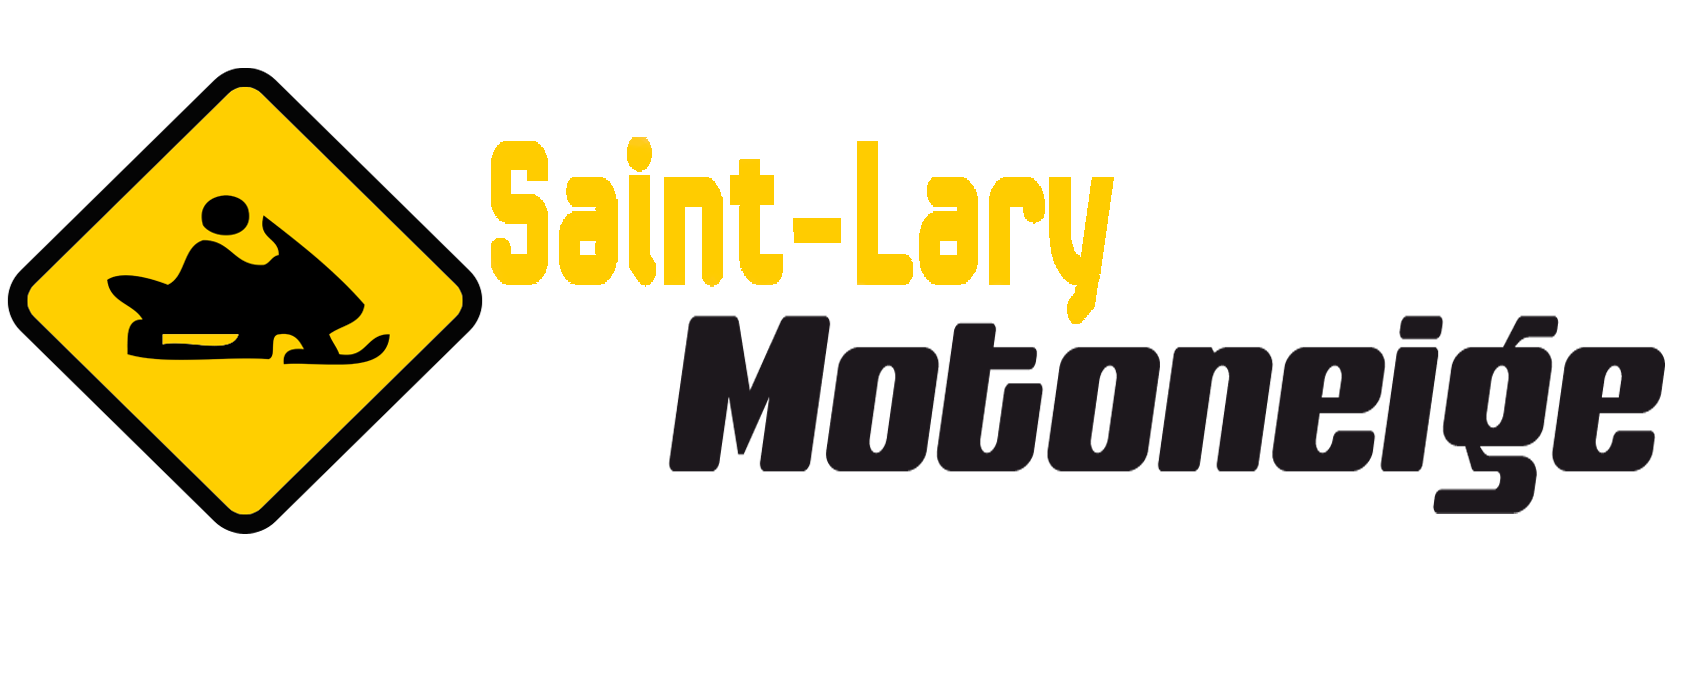 Saint lary motoneige